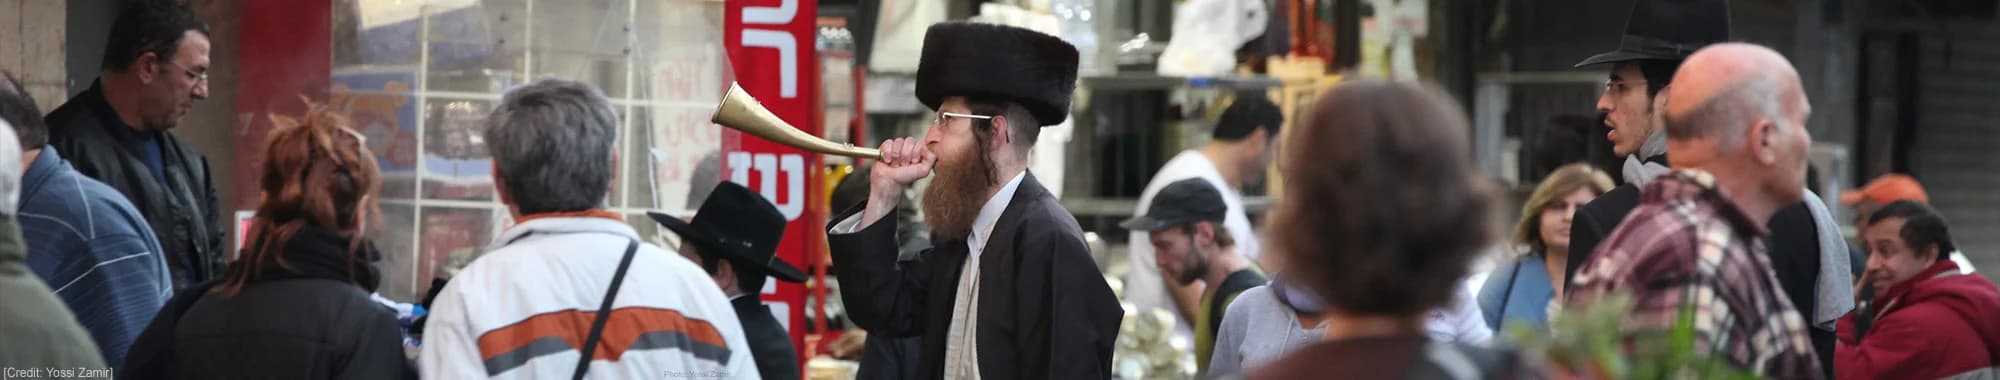 Hasidic Jewish man blowing a golden horn